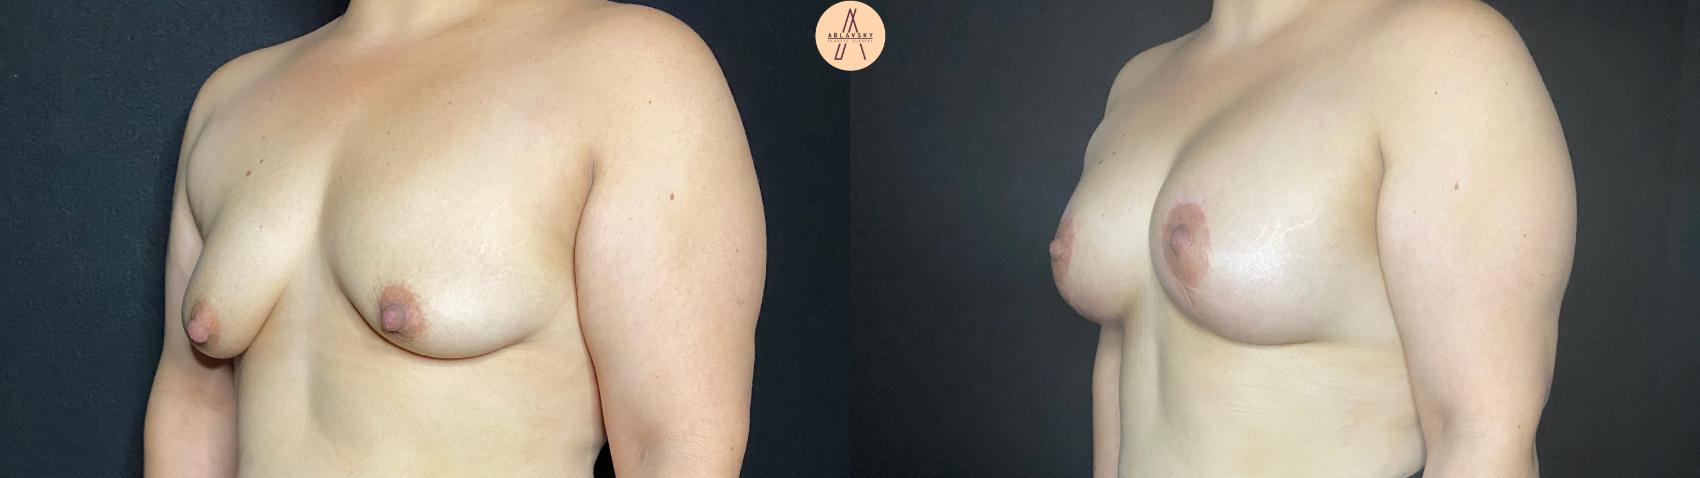 Before & After Breast Augmentation Case 73 Left Oblique View in San Antonio, Texas